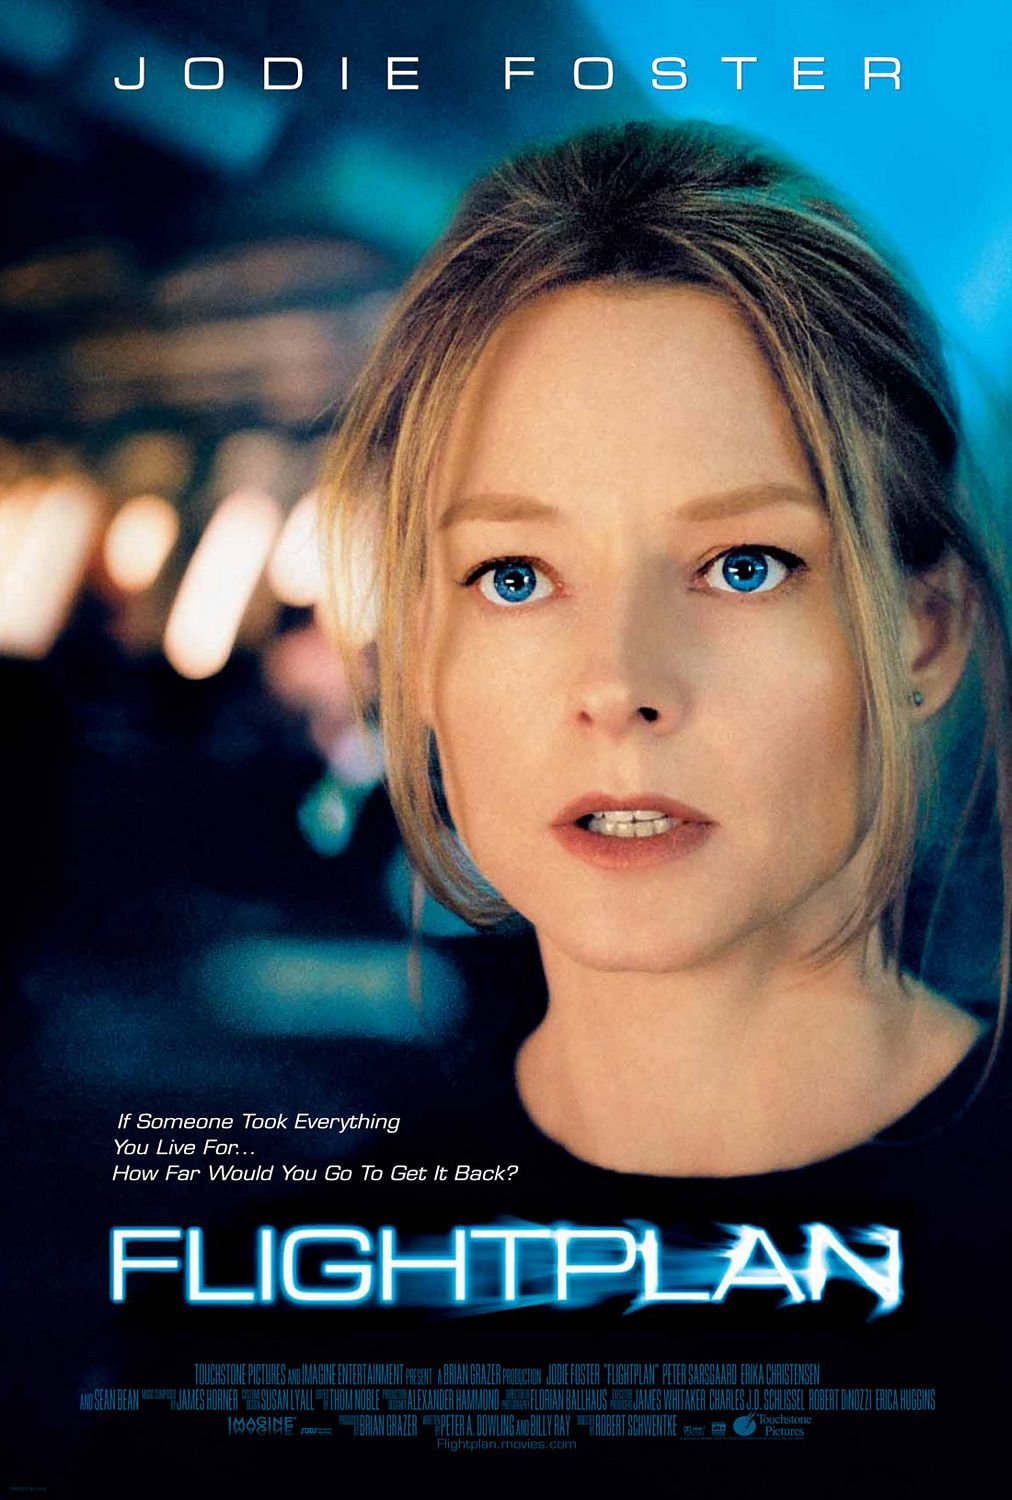 Poster of the movie Flightplan